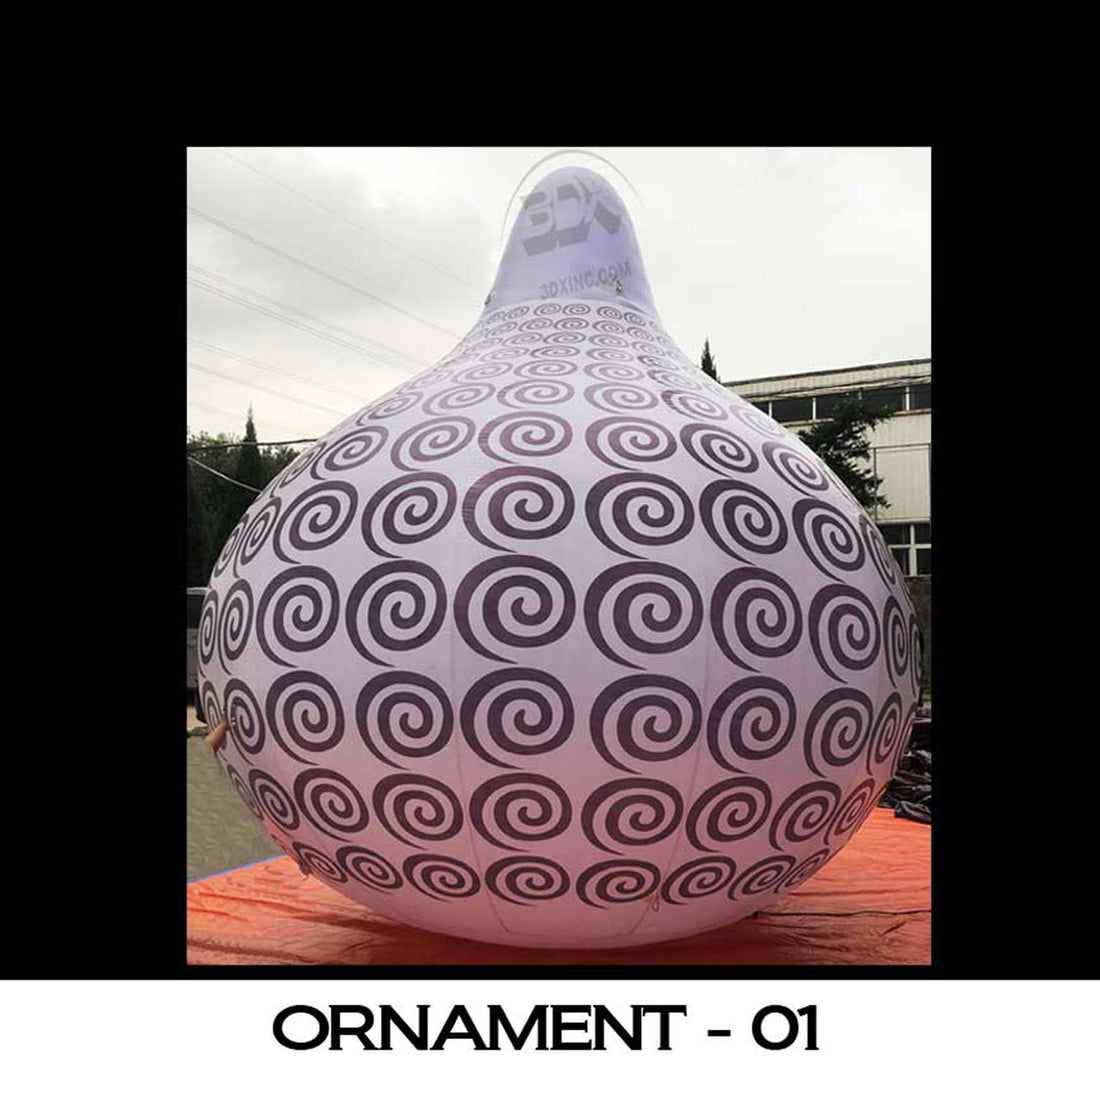 ORNAMENT - 01